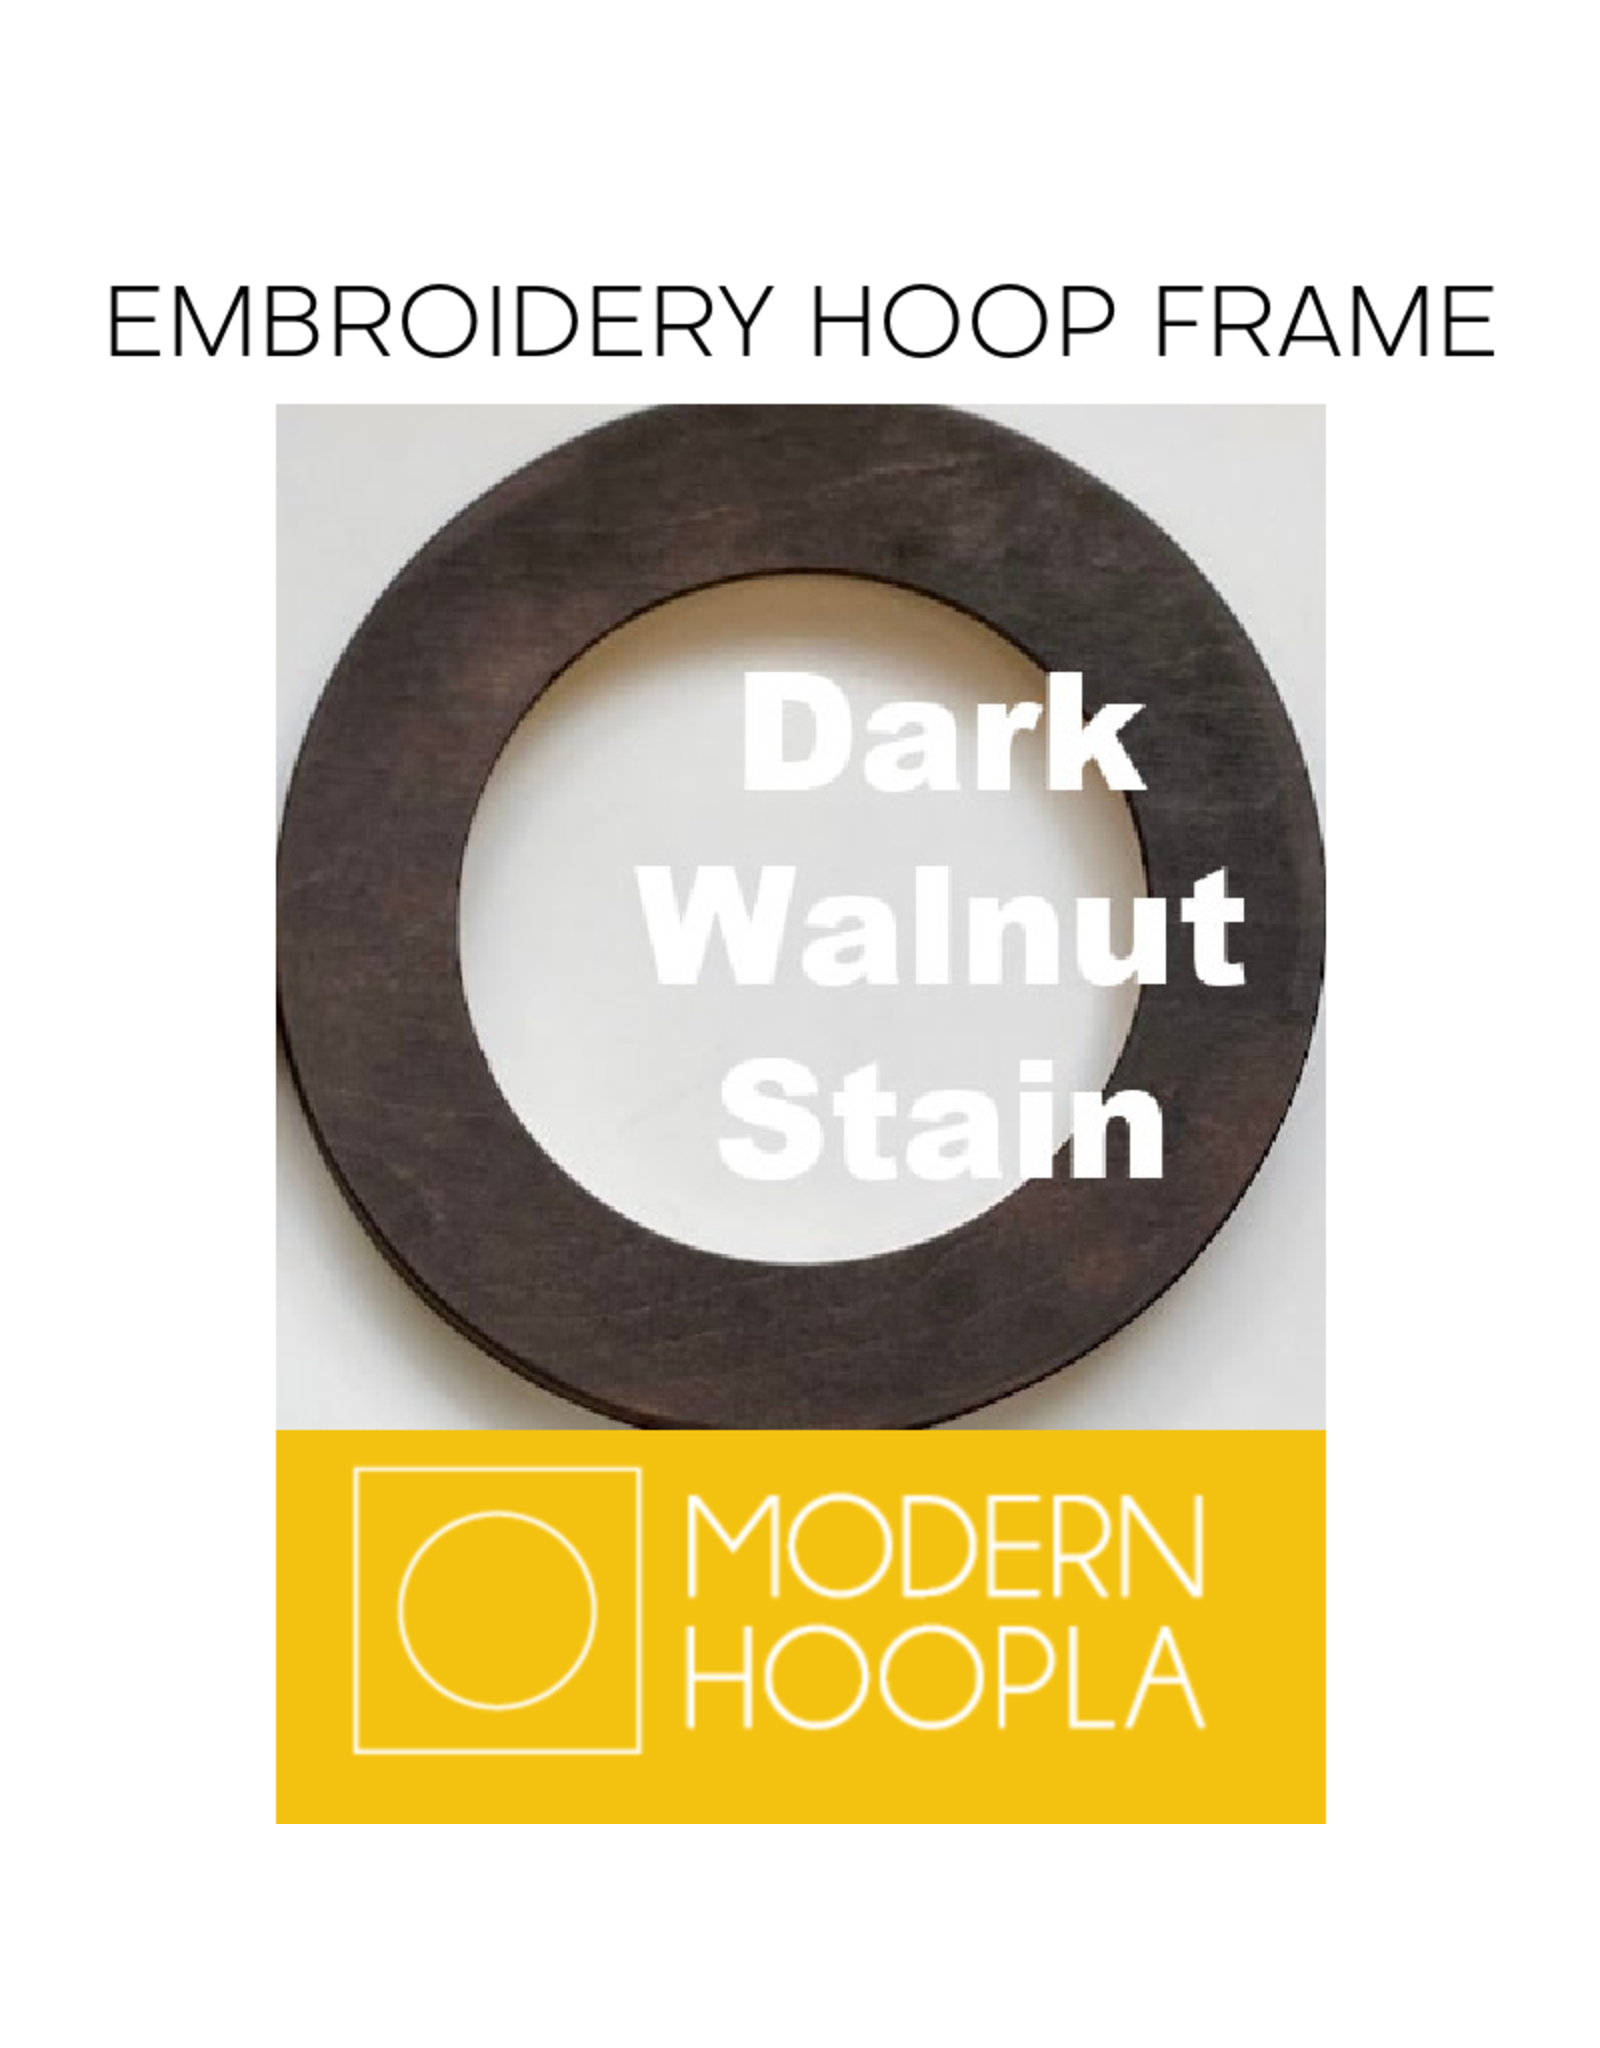 Modern Hoopla Round Hoop Frame in Dark Walnut Stain for 6" Embroidery Hoop